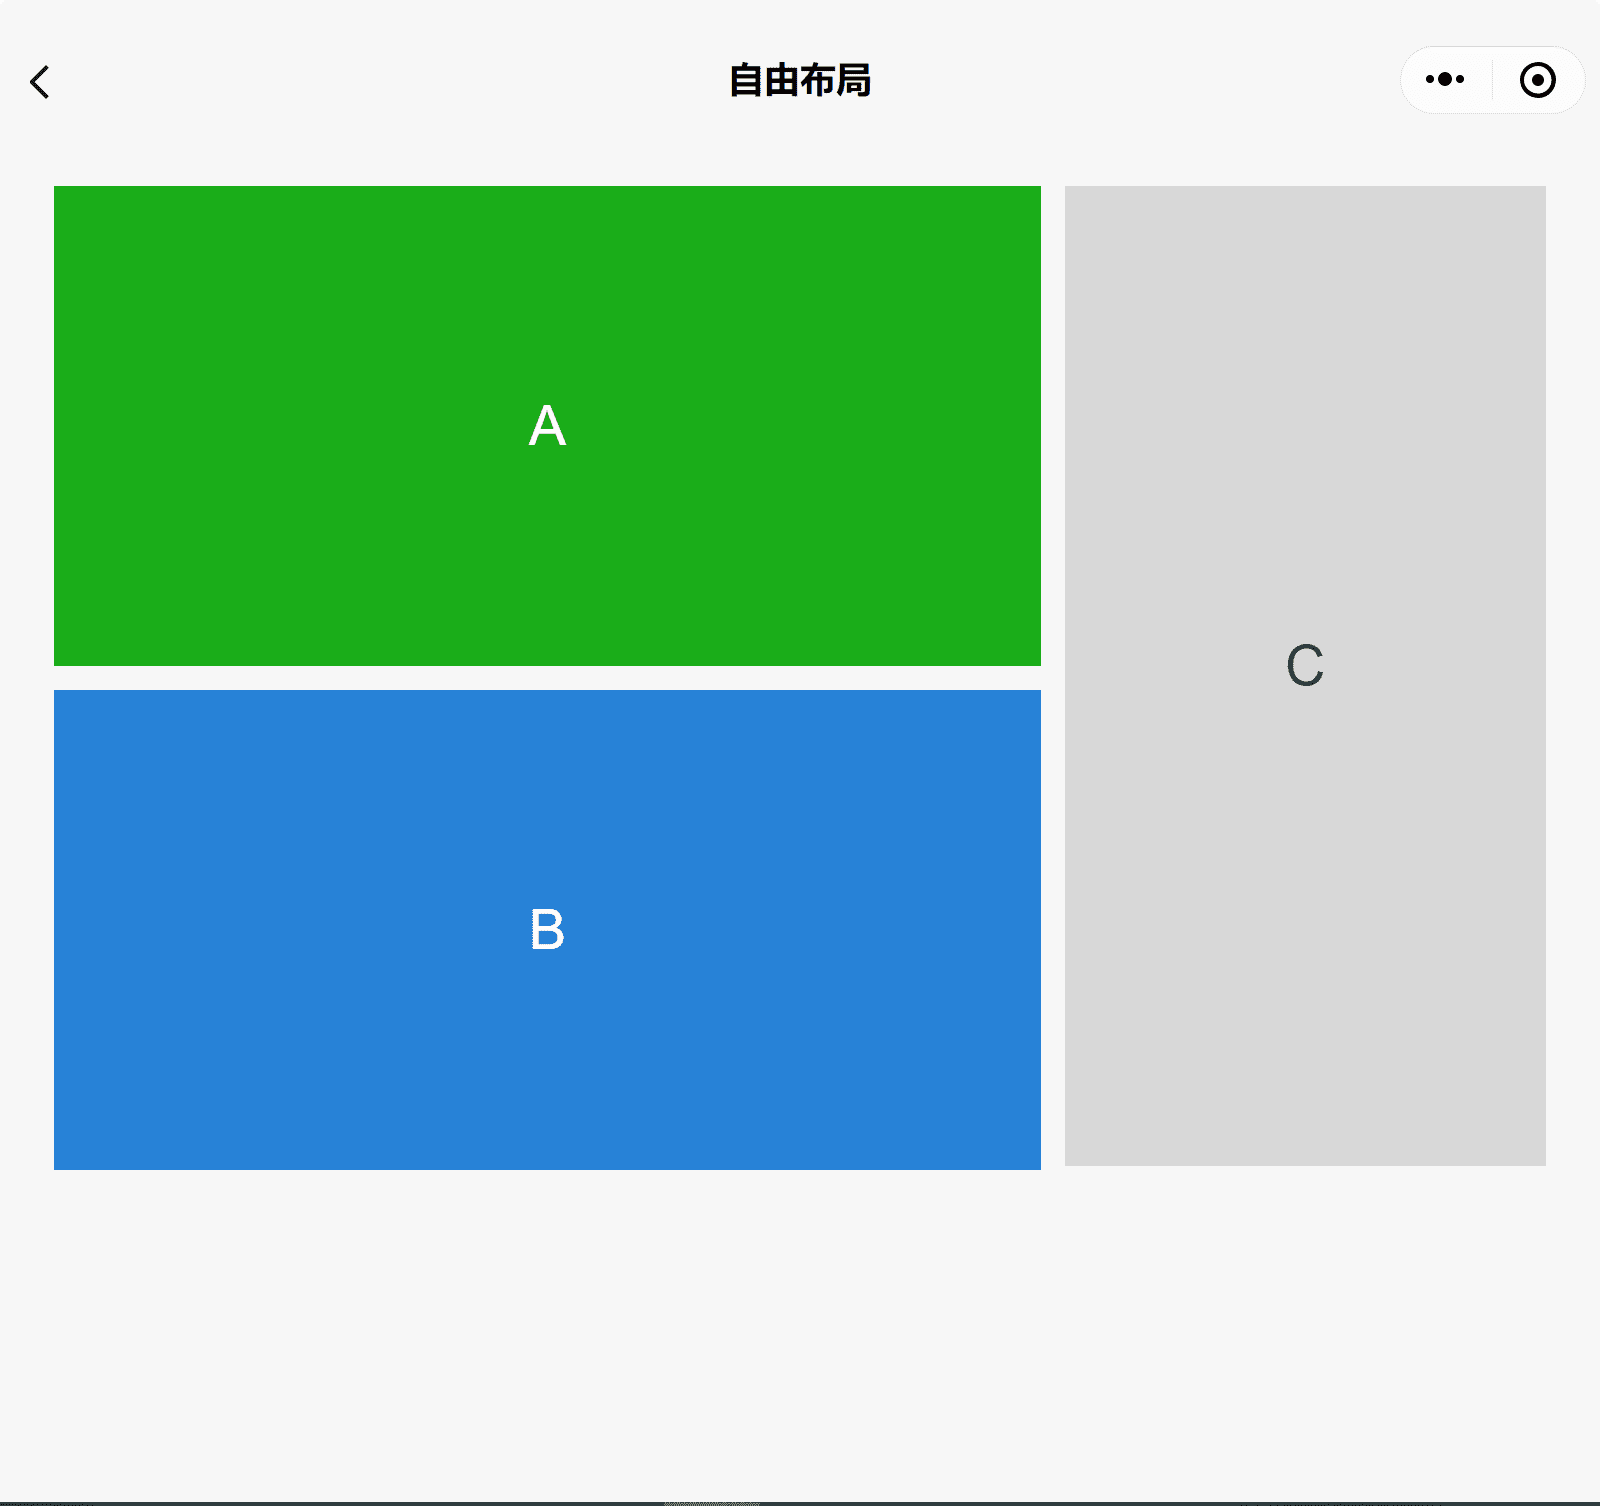 WeChat কম্পোনেন্ট ডেমো অ্যাপটি একটি প্রশস্ত উইন্ডোতে তিনটি বাক্স A, B, এবং C দেখায় এবং A এর উপরে B এবং C এর পাশে স্ট্যাক করা আছে।